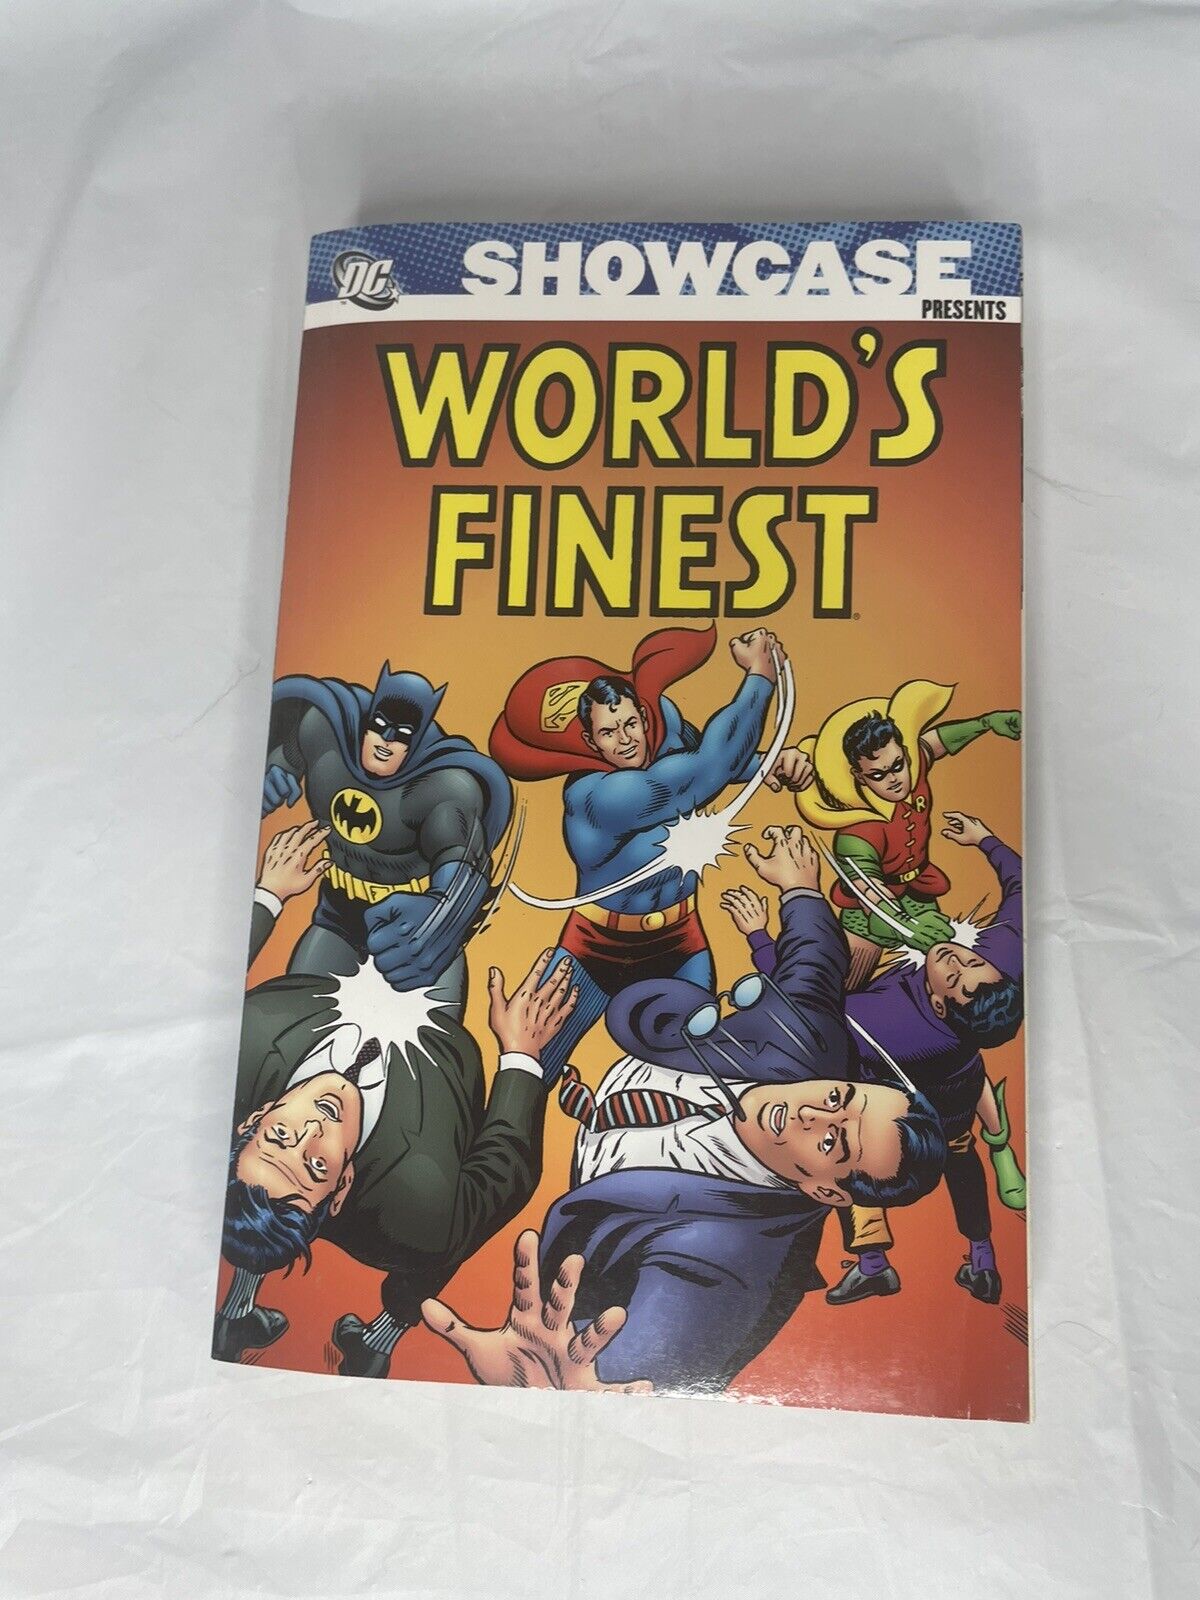 Showcase Presents: World's Finest #3 (DC Comics, May 2010)